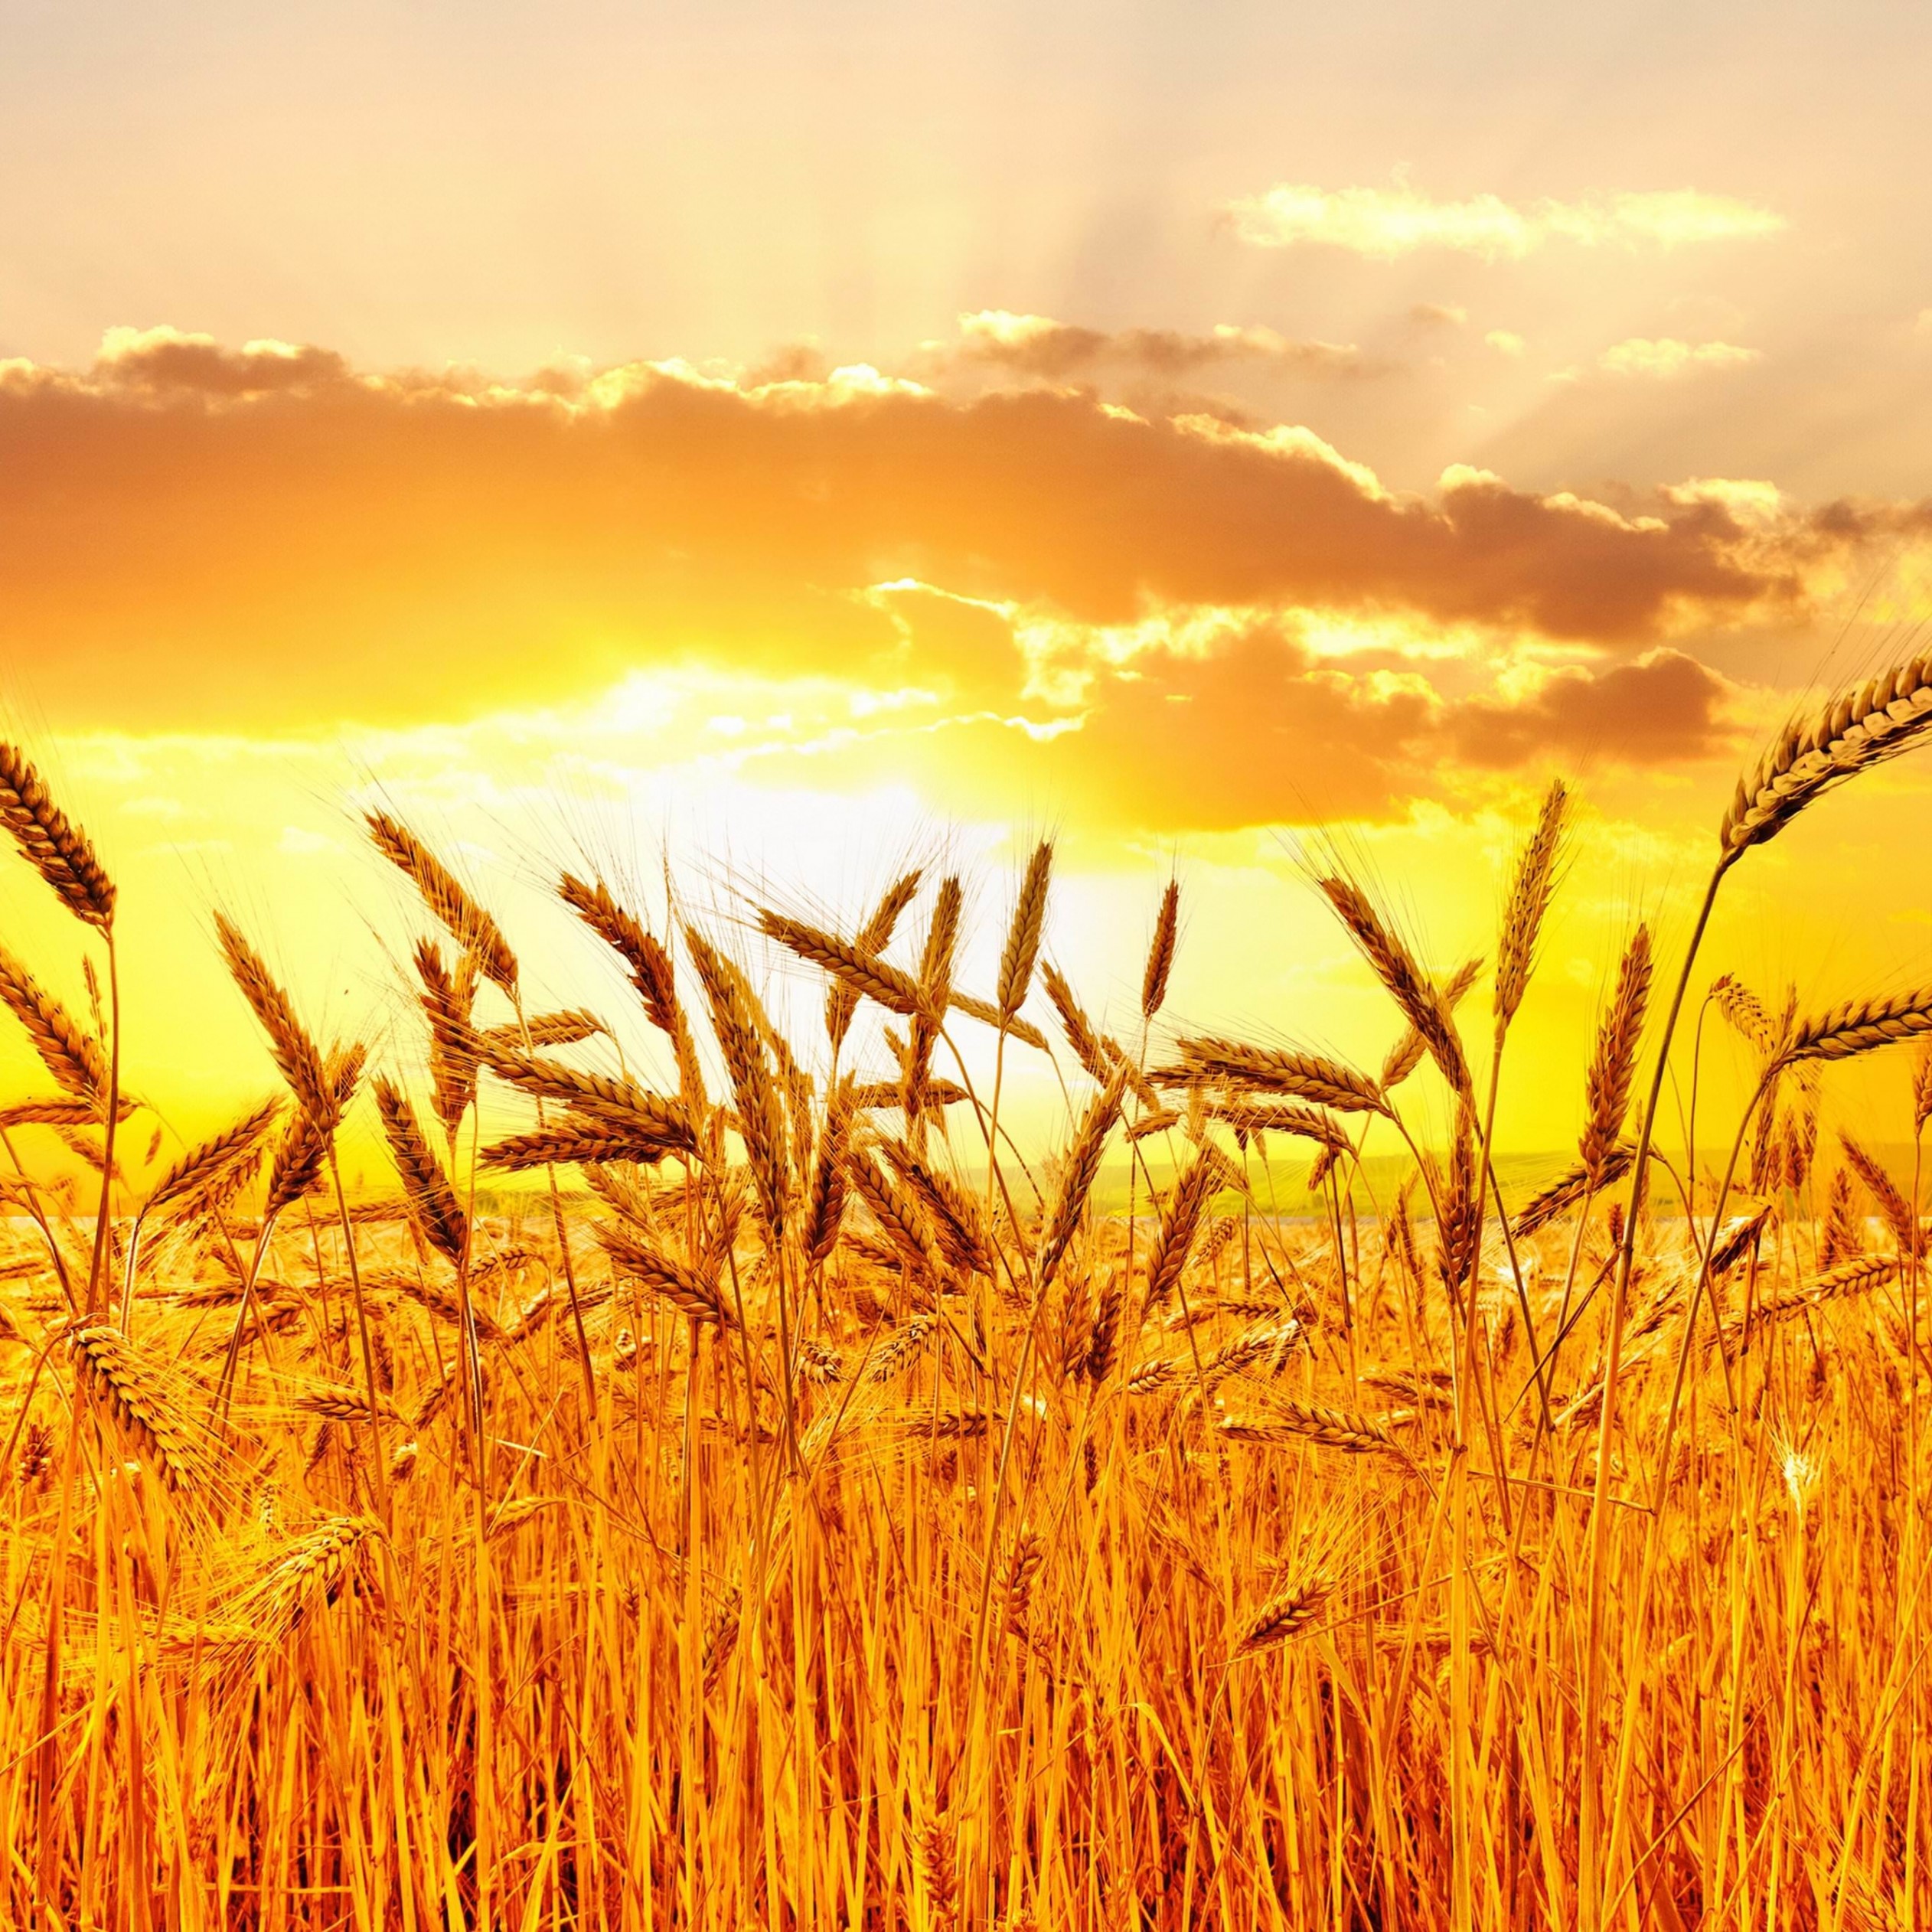 Golden Wheat Field At Sunset Wallpaper for Apple iPad 4